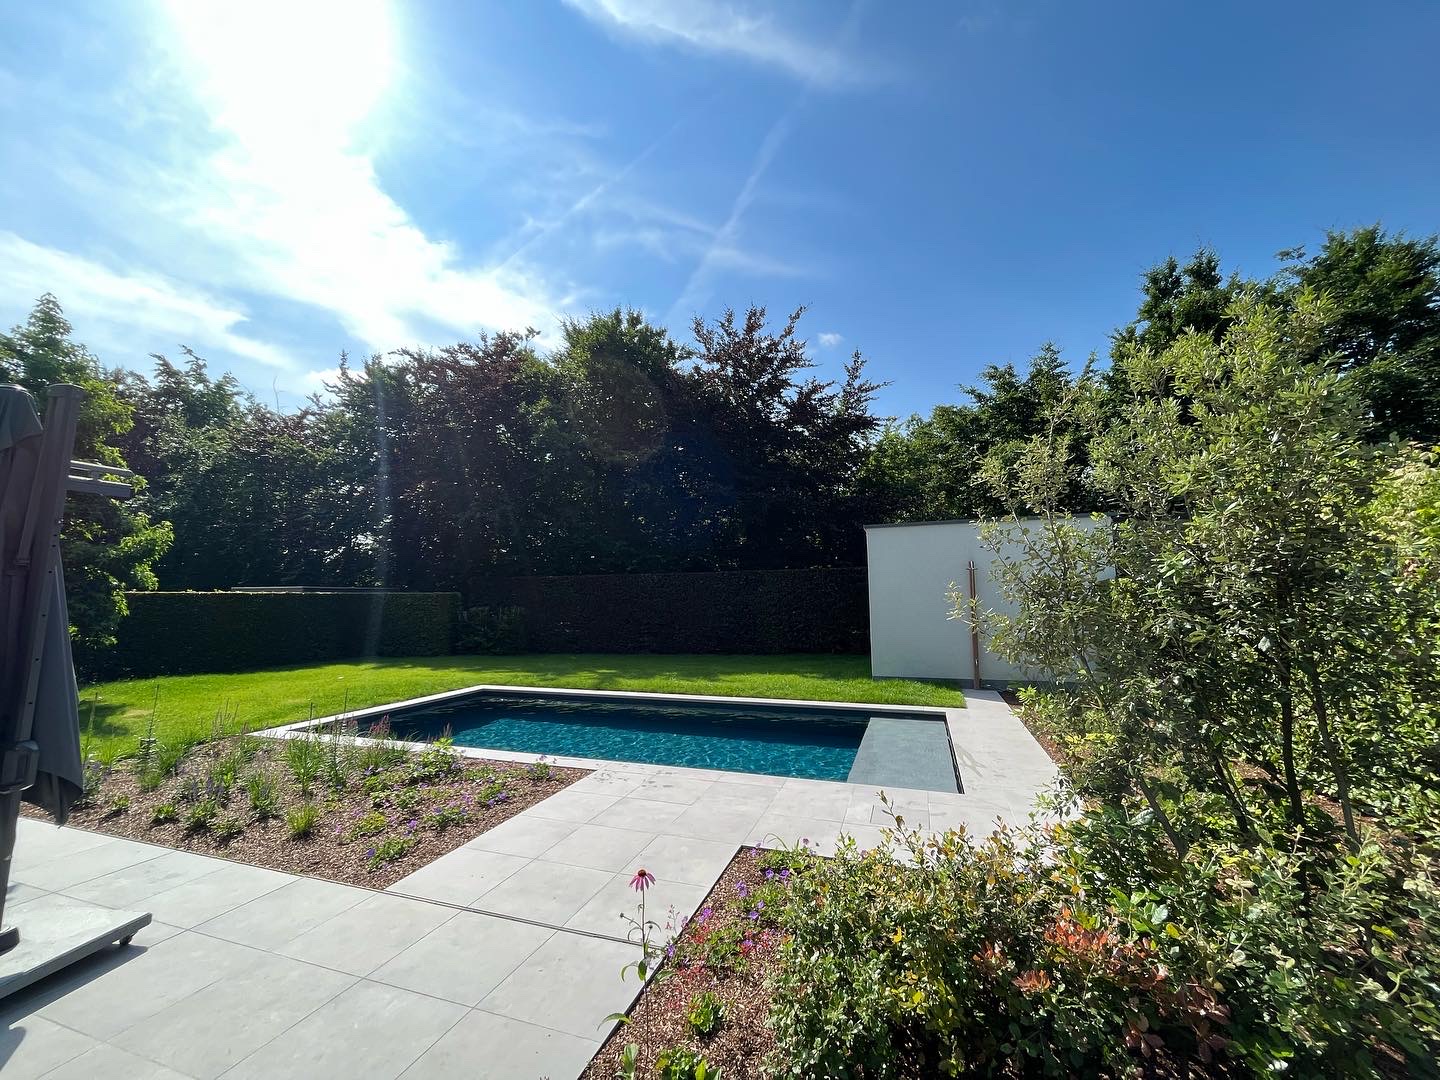 ecozwembad compact in zonnige tuin met ruim terras